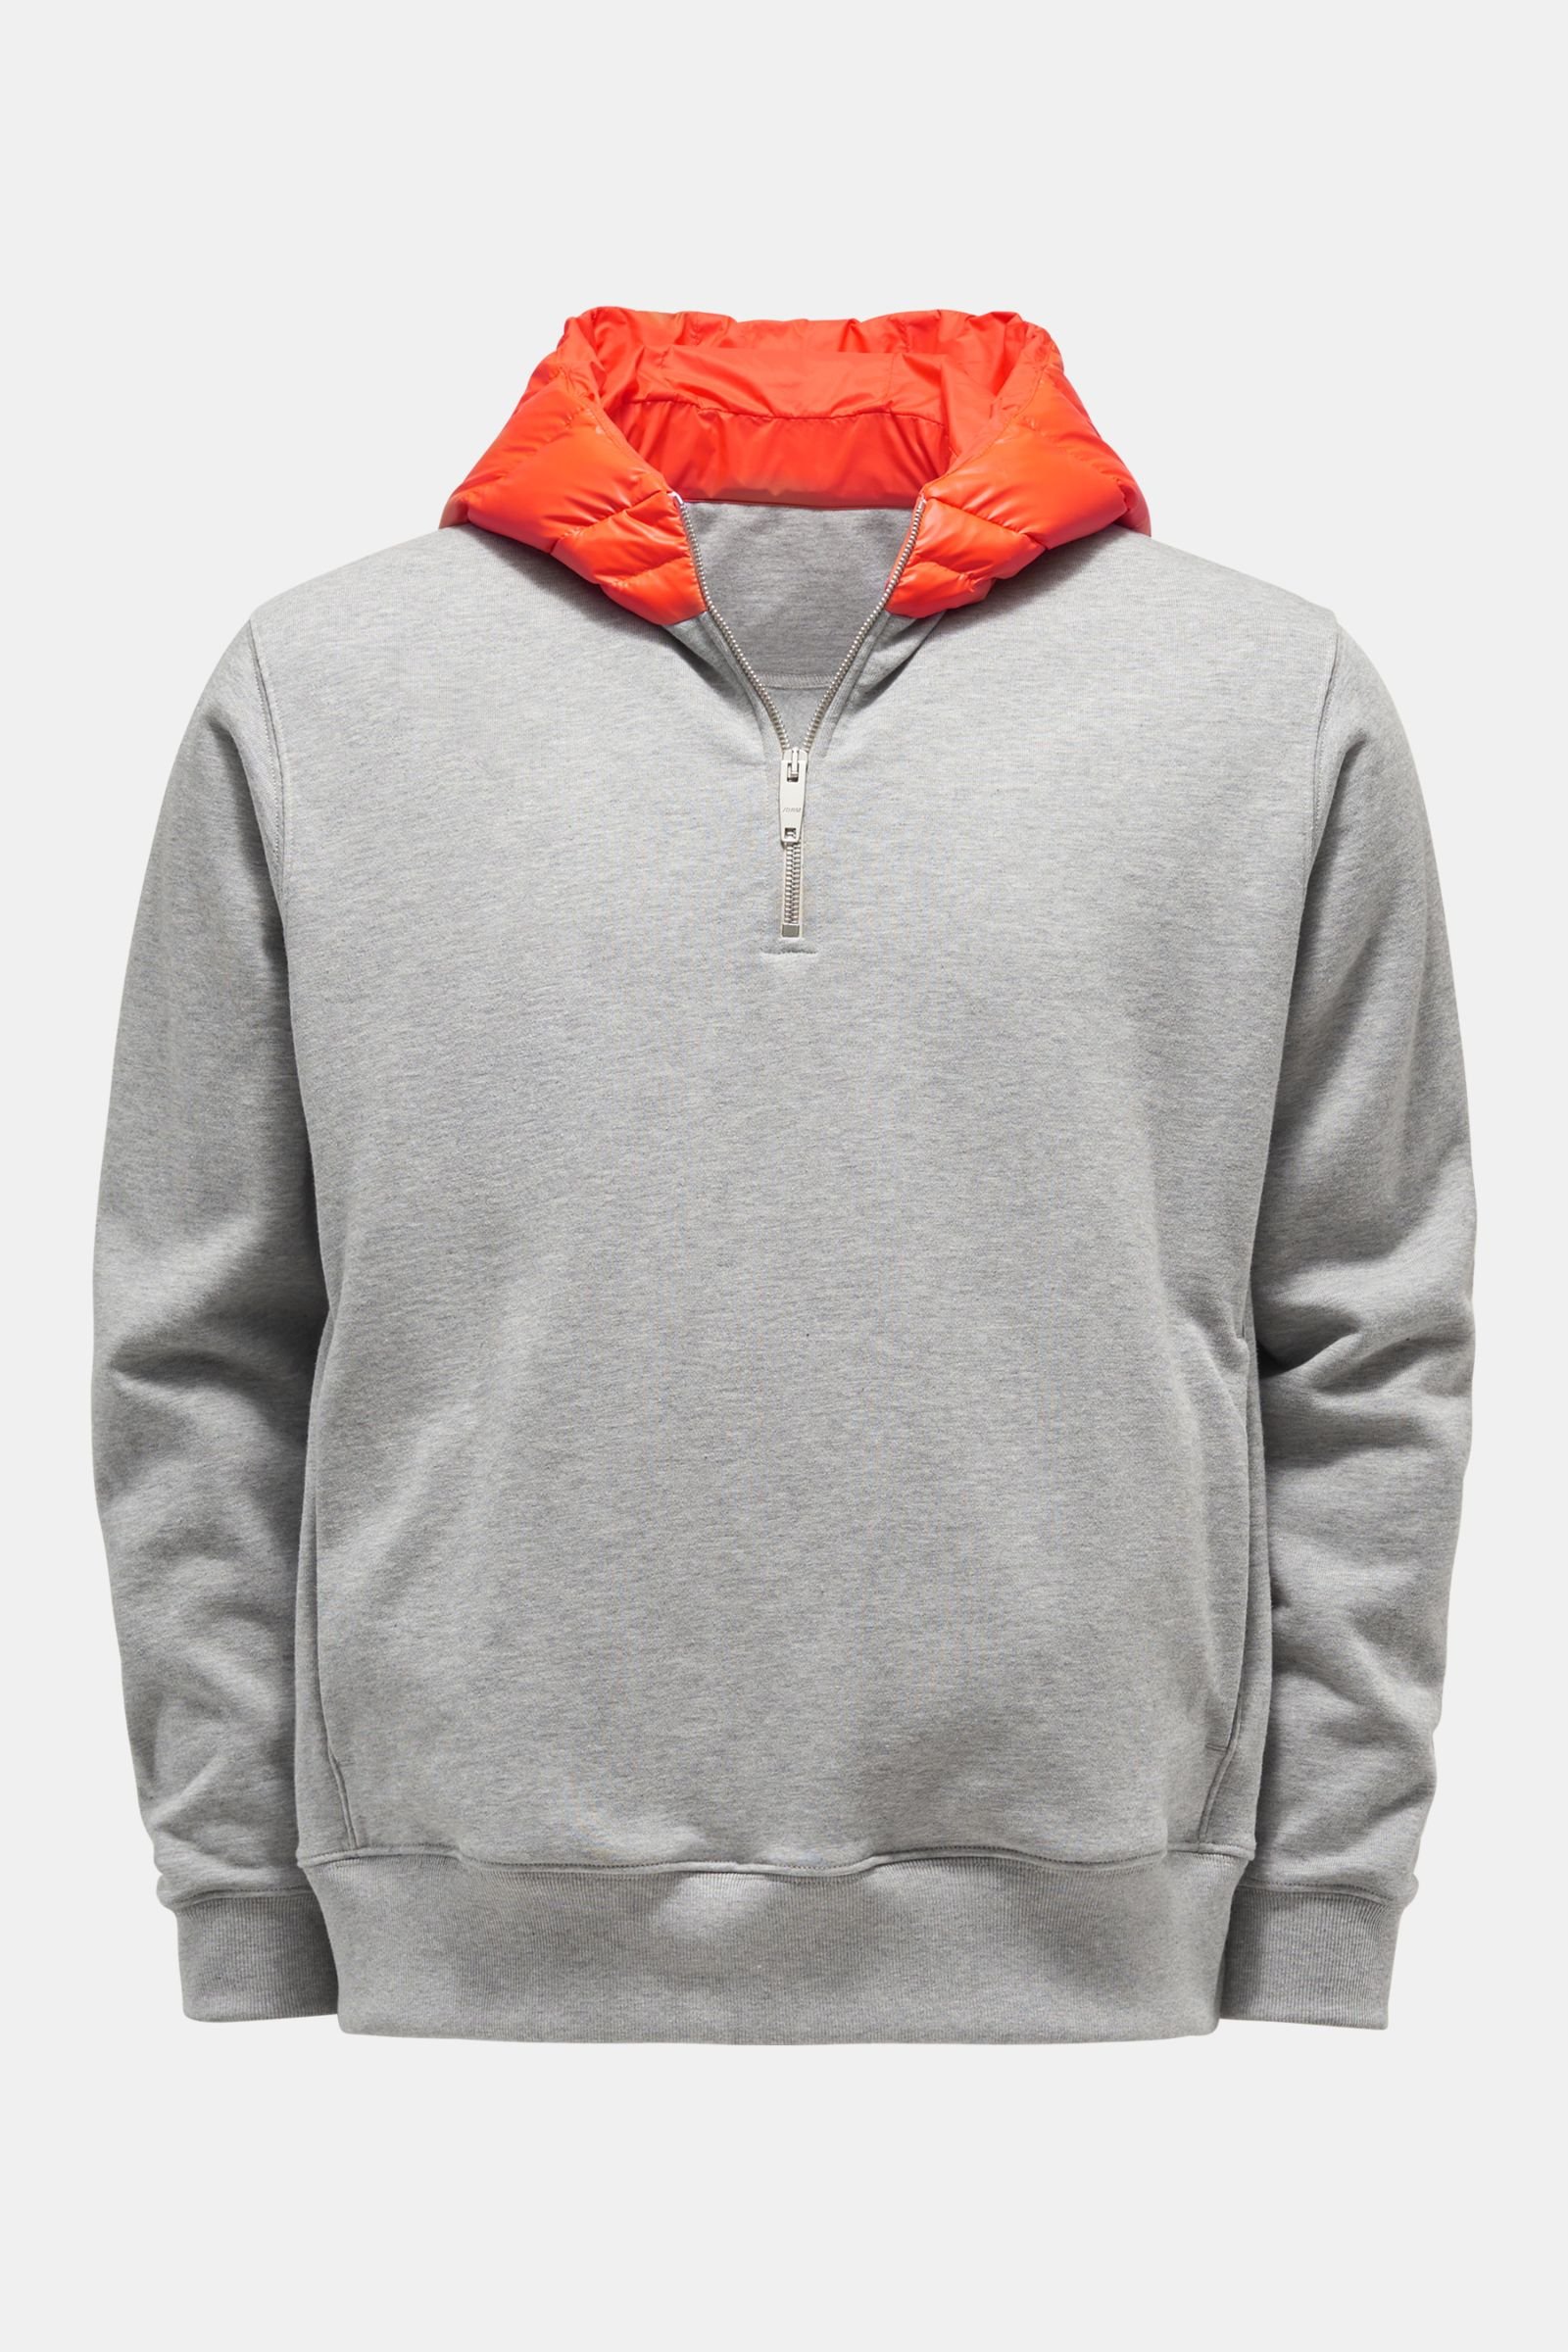 Sweat half-zip jumper grey/orange